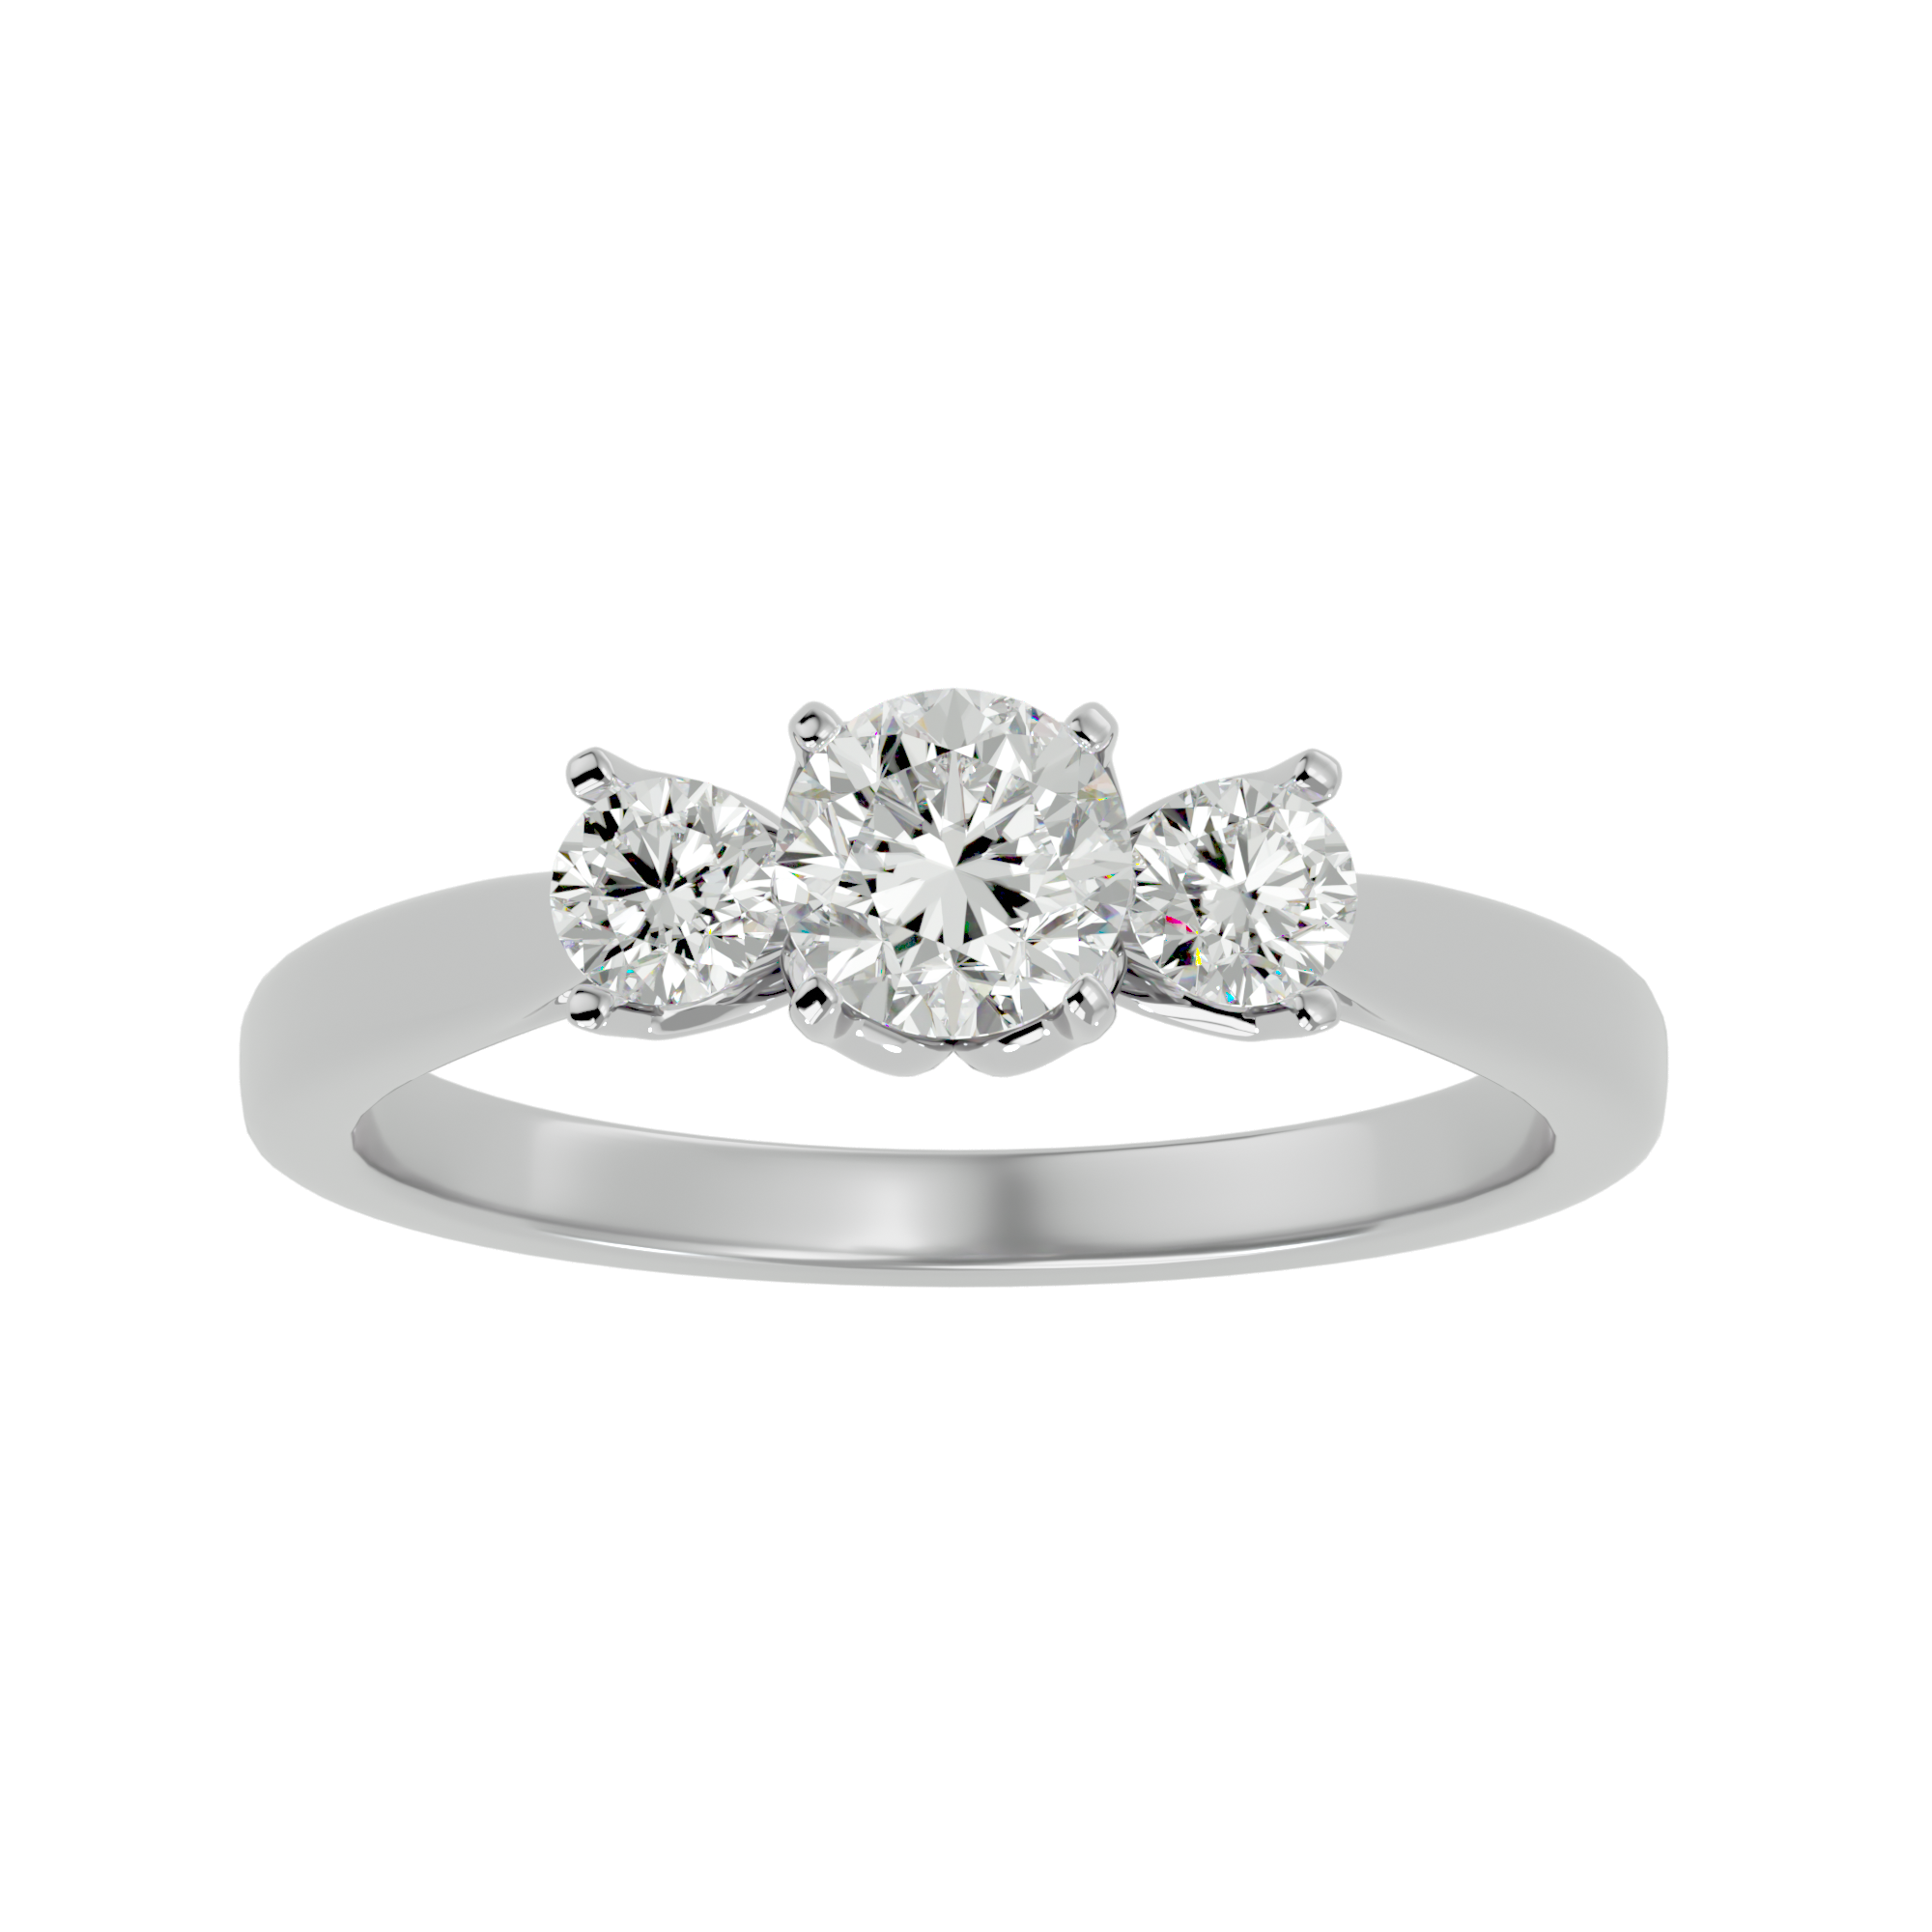 Criste Diamond Ring